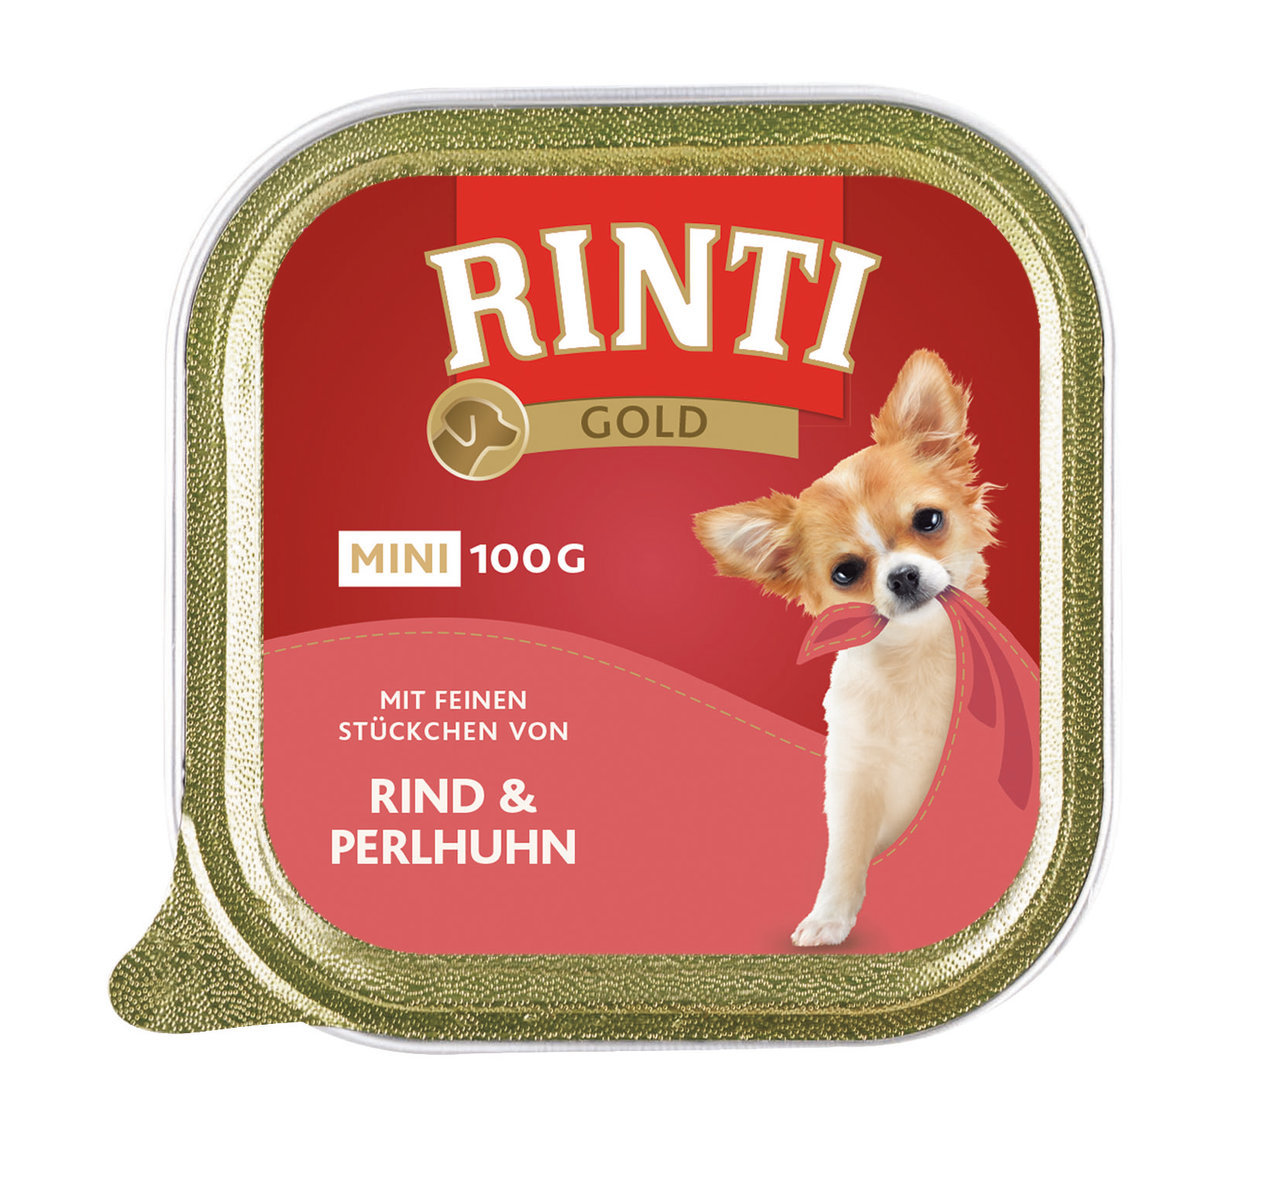 RINTI Gold Mini Rind & Perlhuhn 100g Schale Hundenassfutter